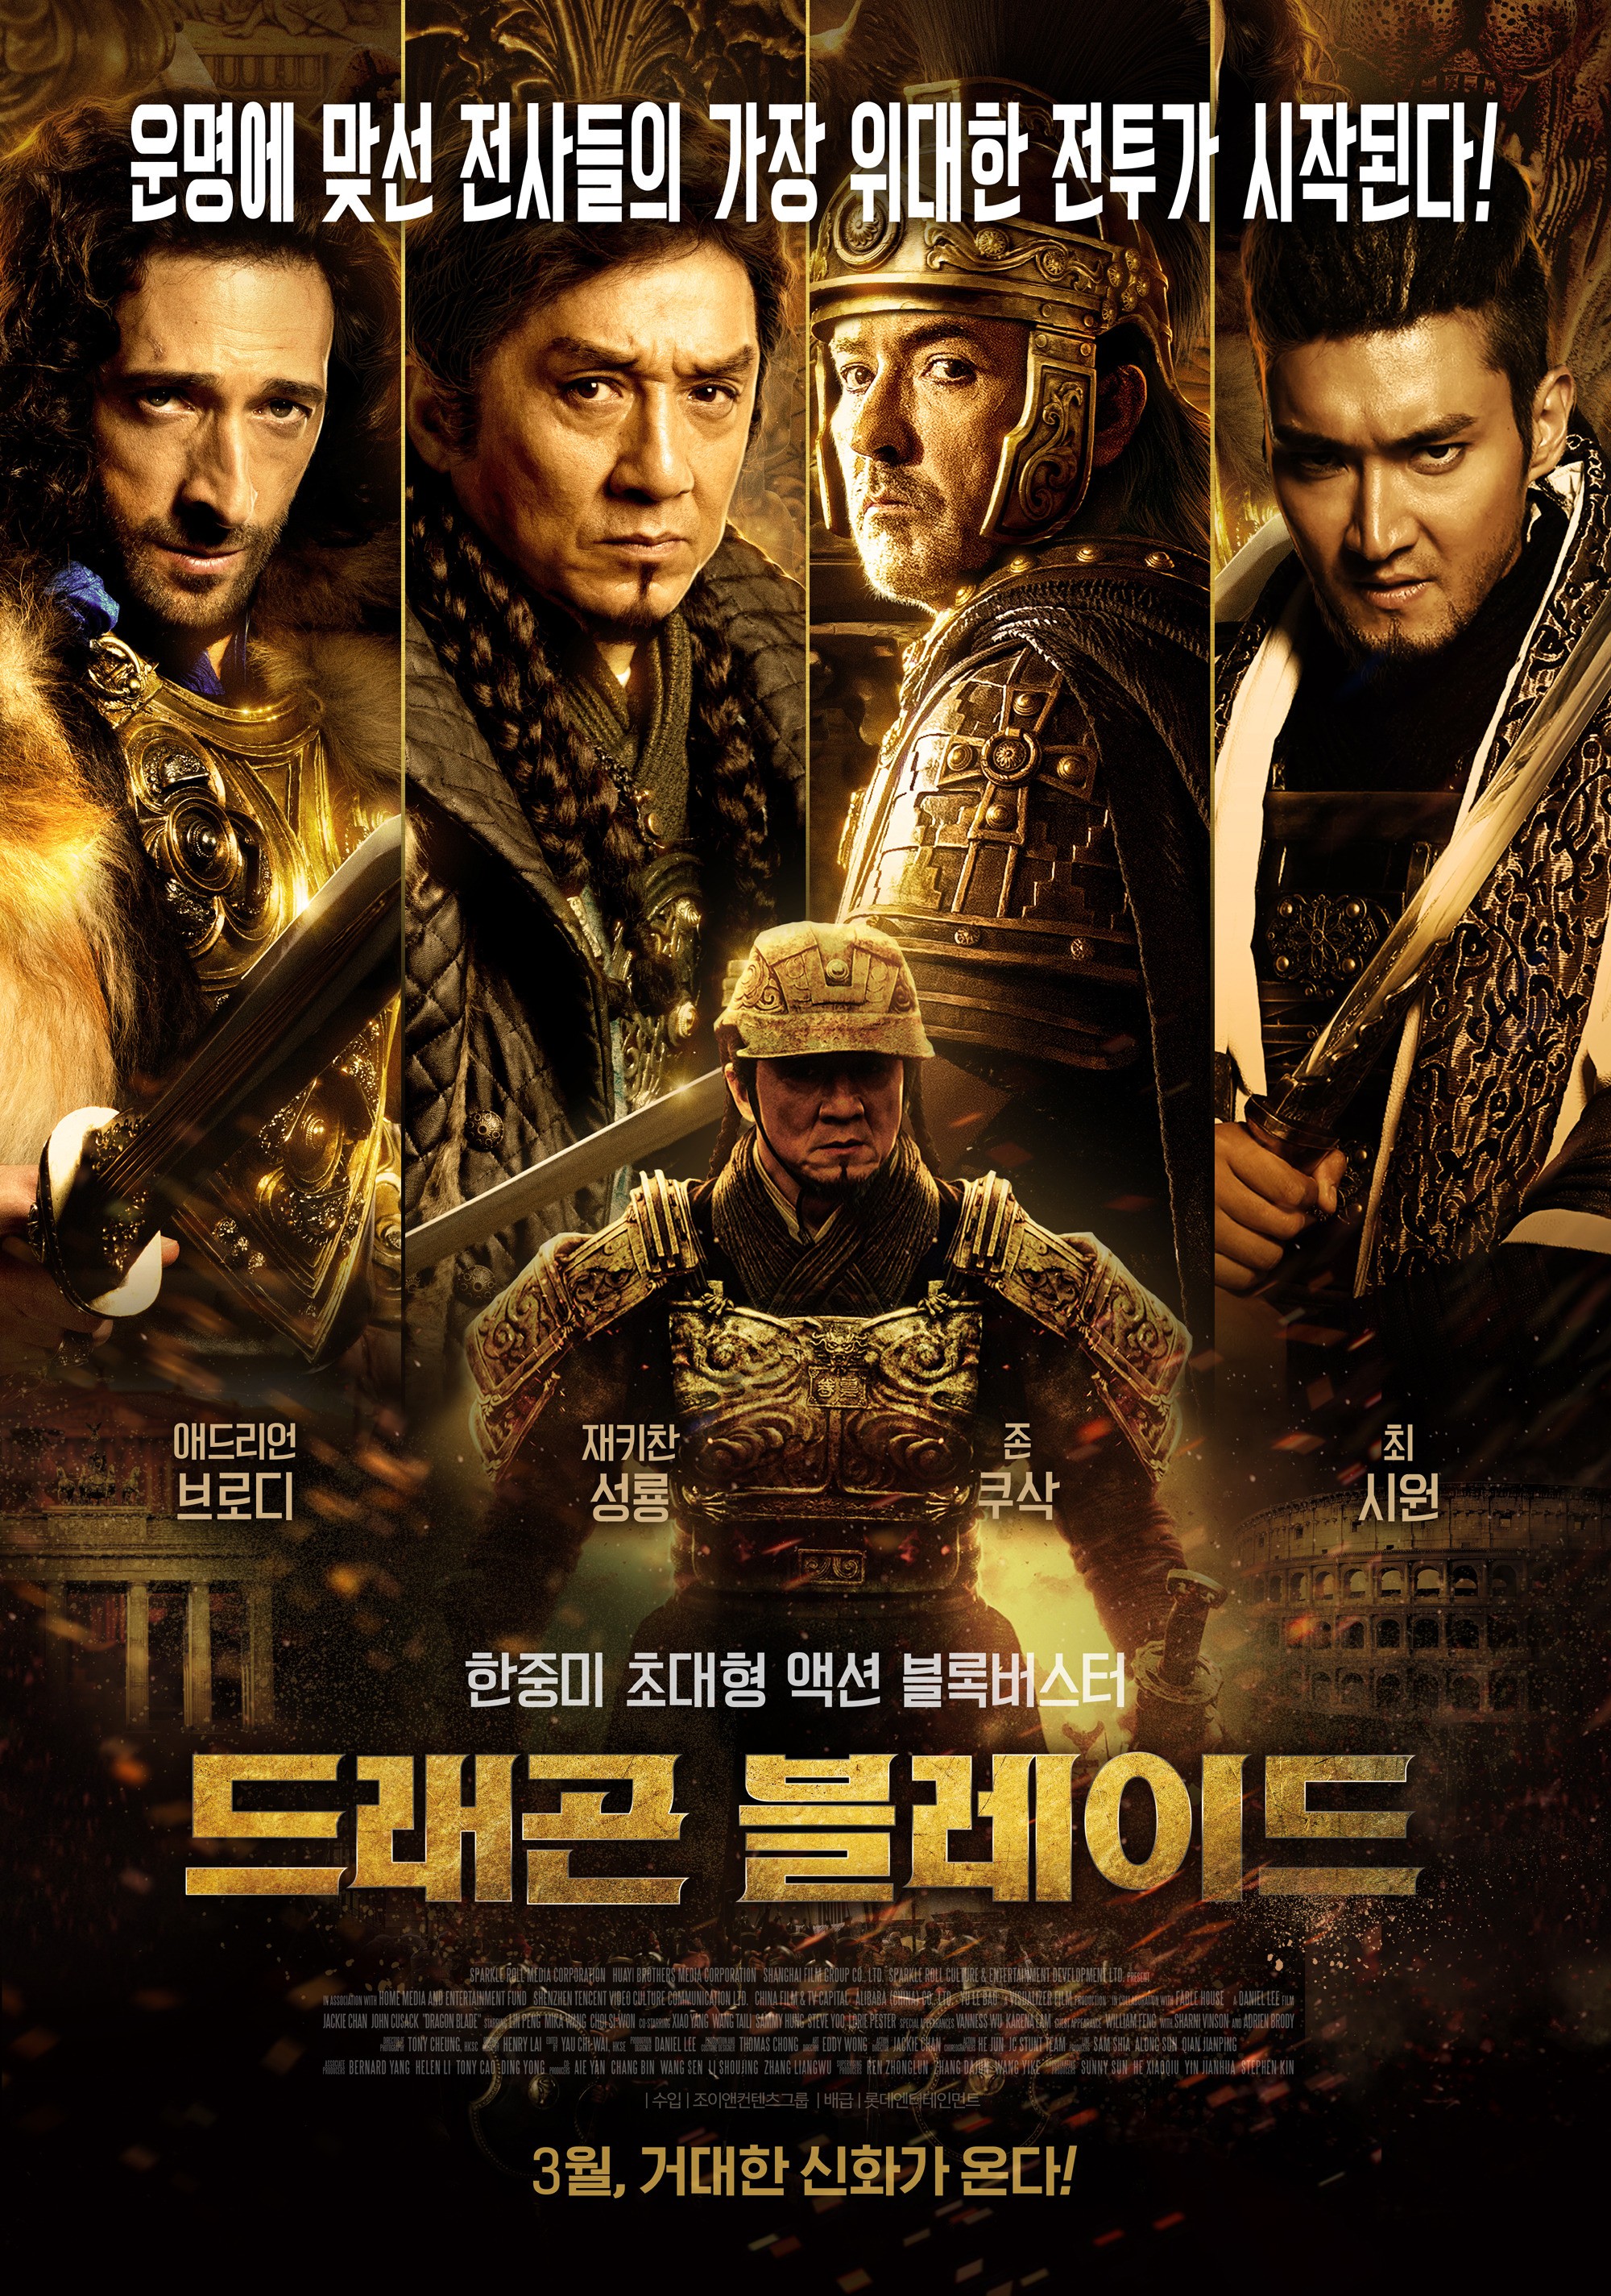 Mega Sized Movie Poster Image for Tian jiang xiong shi (#9 of 10)